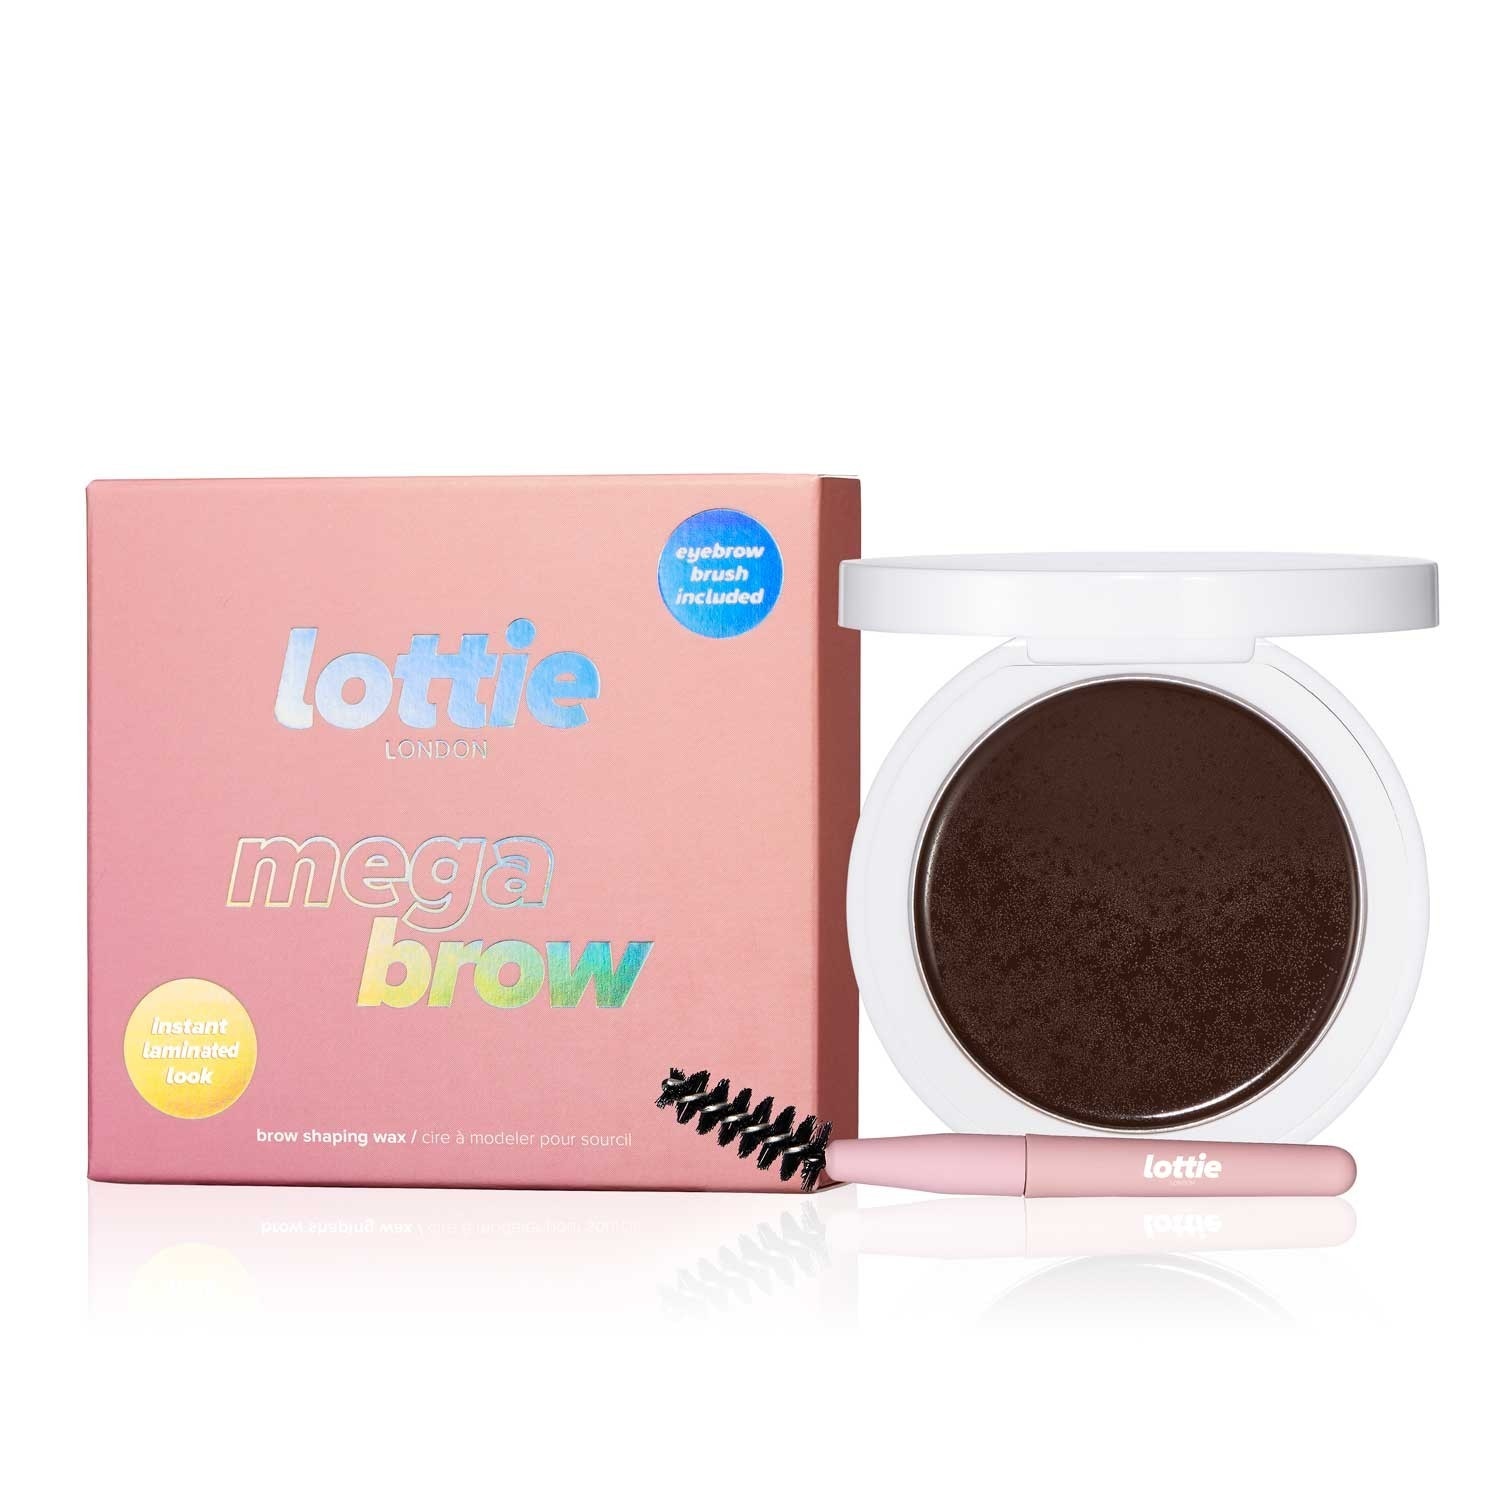 Lottie London Mega Brow – Tinted, 37 g